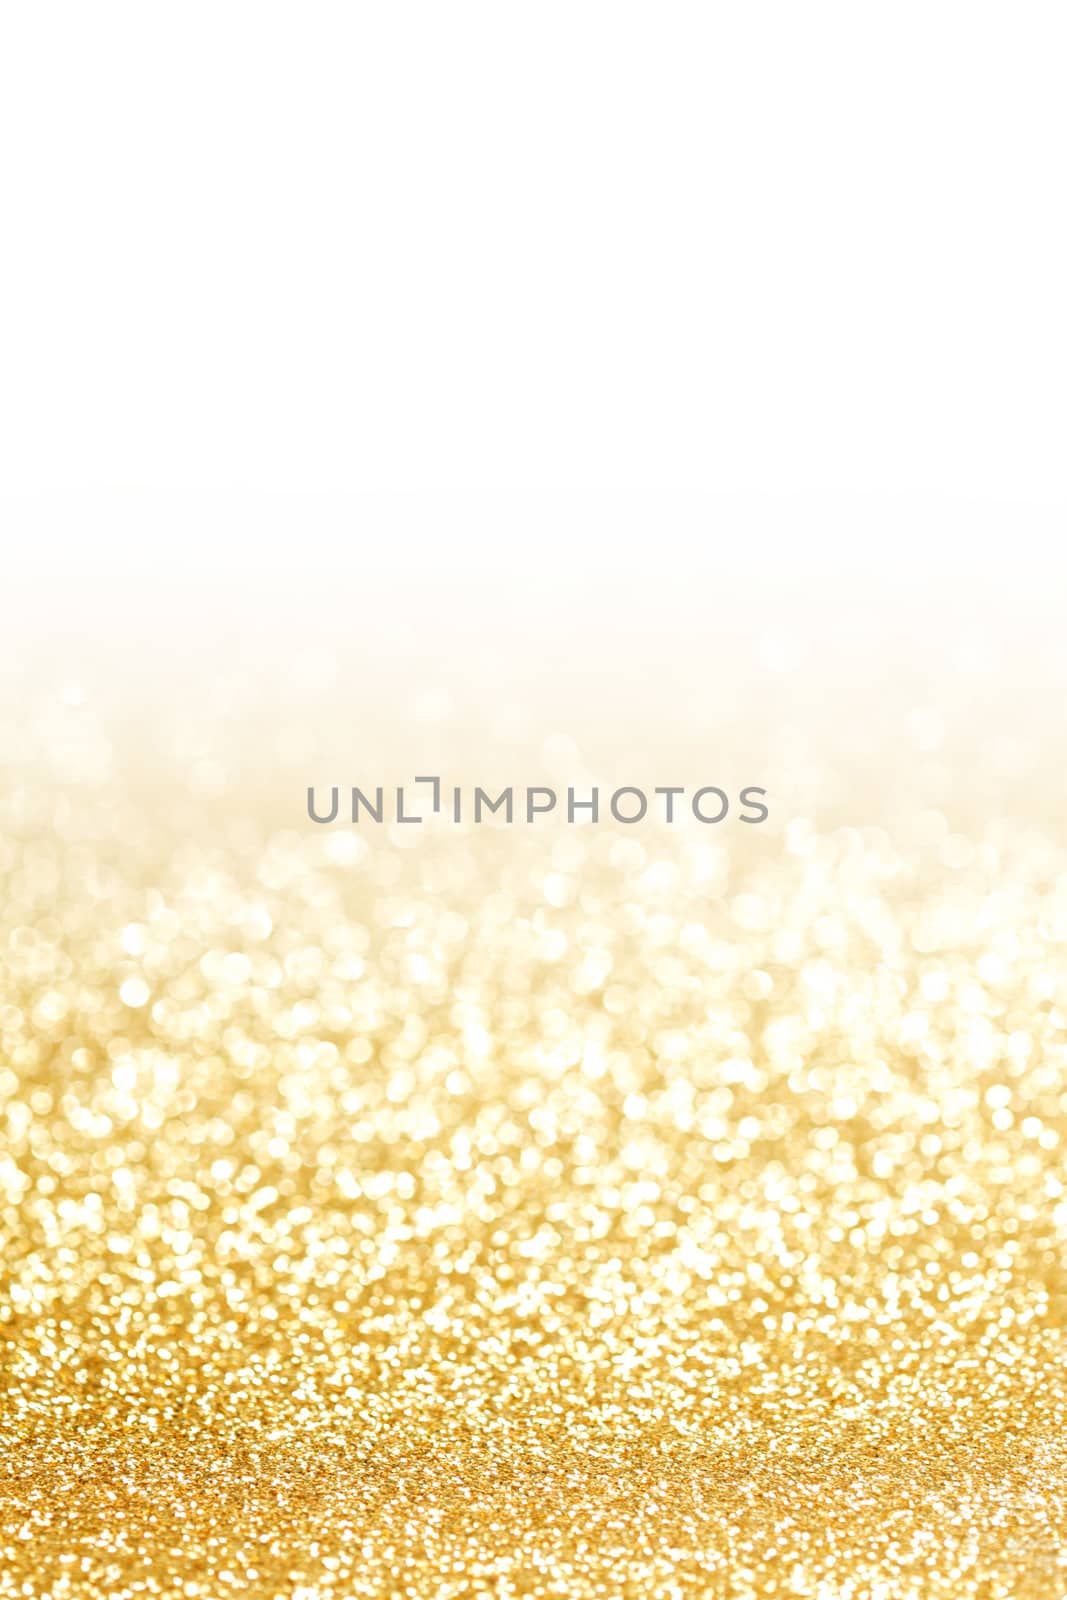 Golden decorative glitters on white background